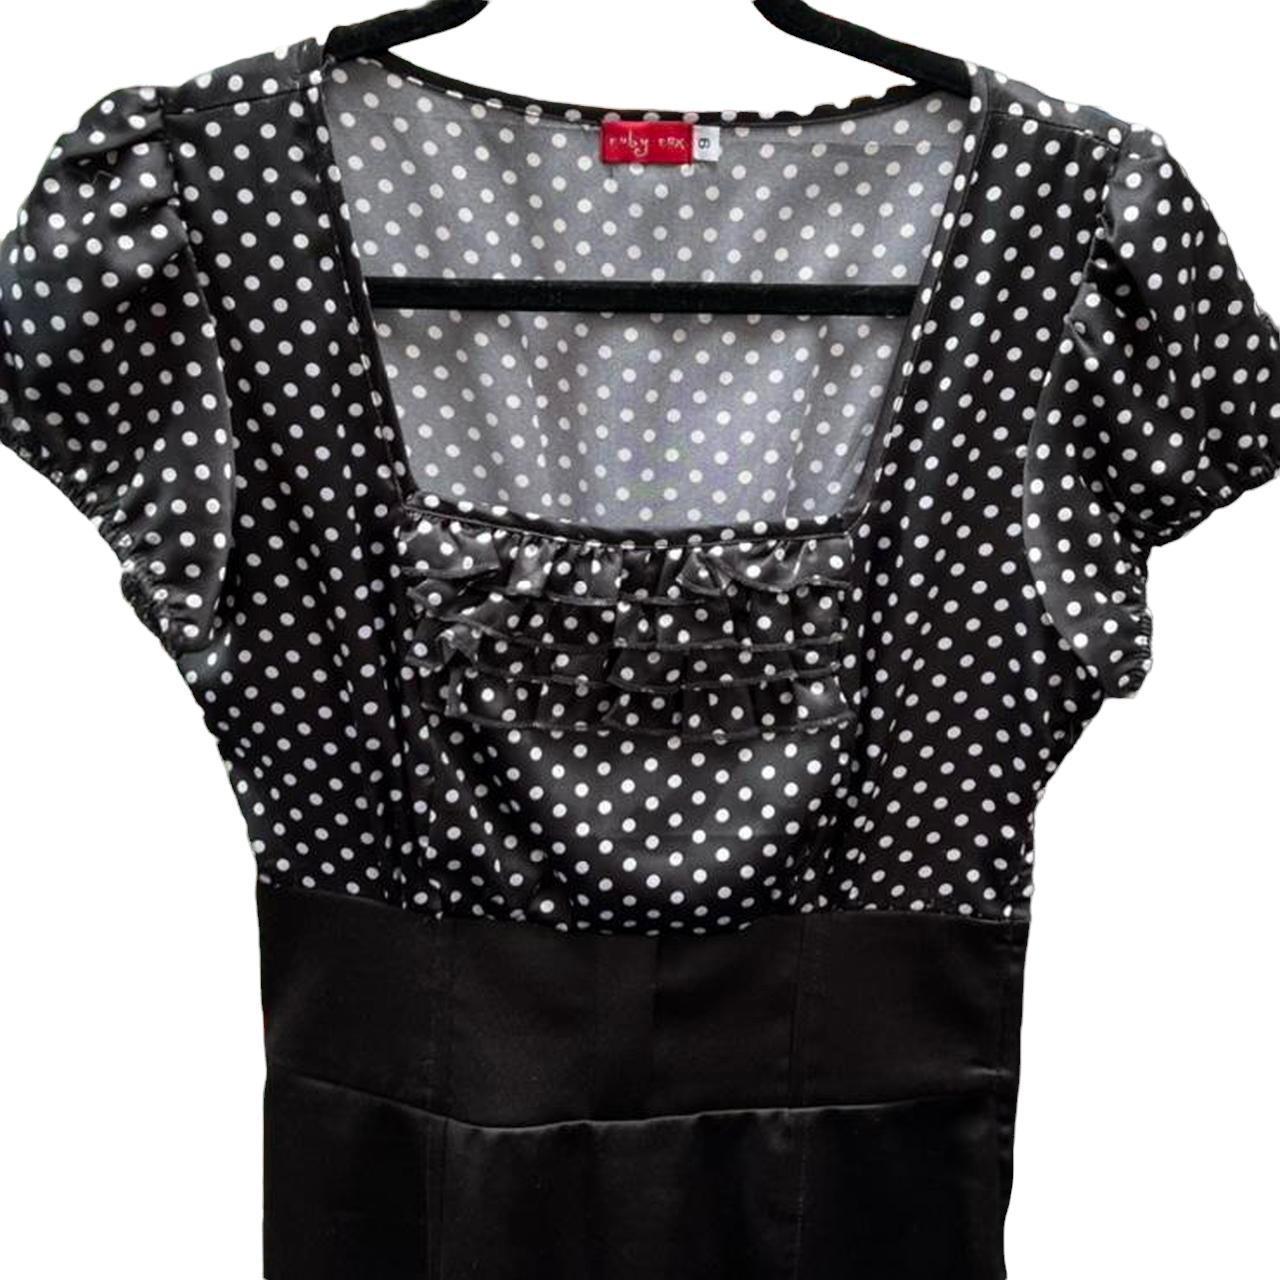 Product Image 3 - Polka dot dress Black &